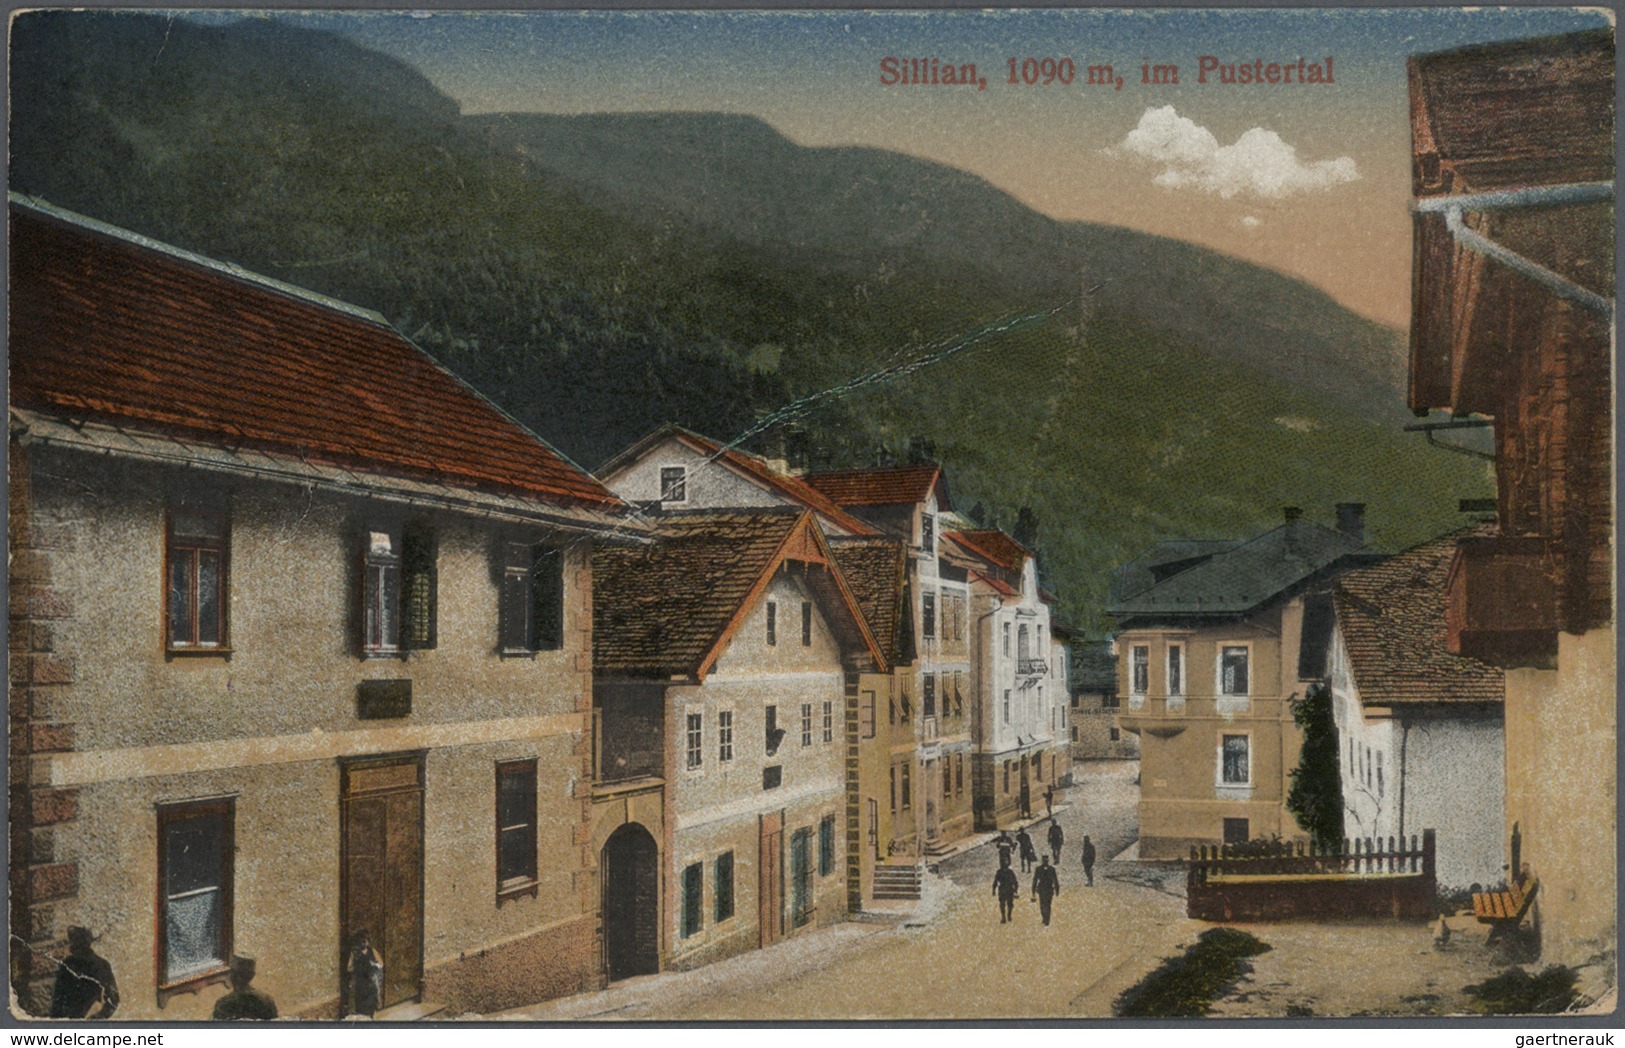 Italien - Besonderheiten: 1898/1935, South Tyrol / Alto Adige. A Traders Stock Of Around 12,500 Pict - Non Classés